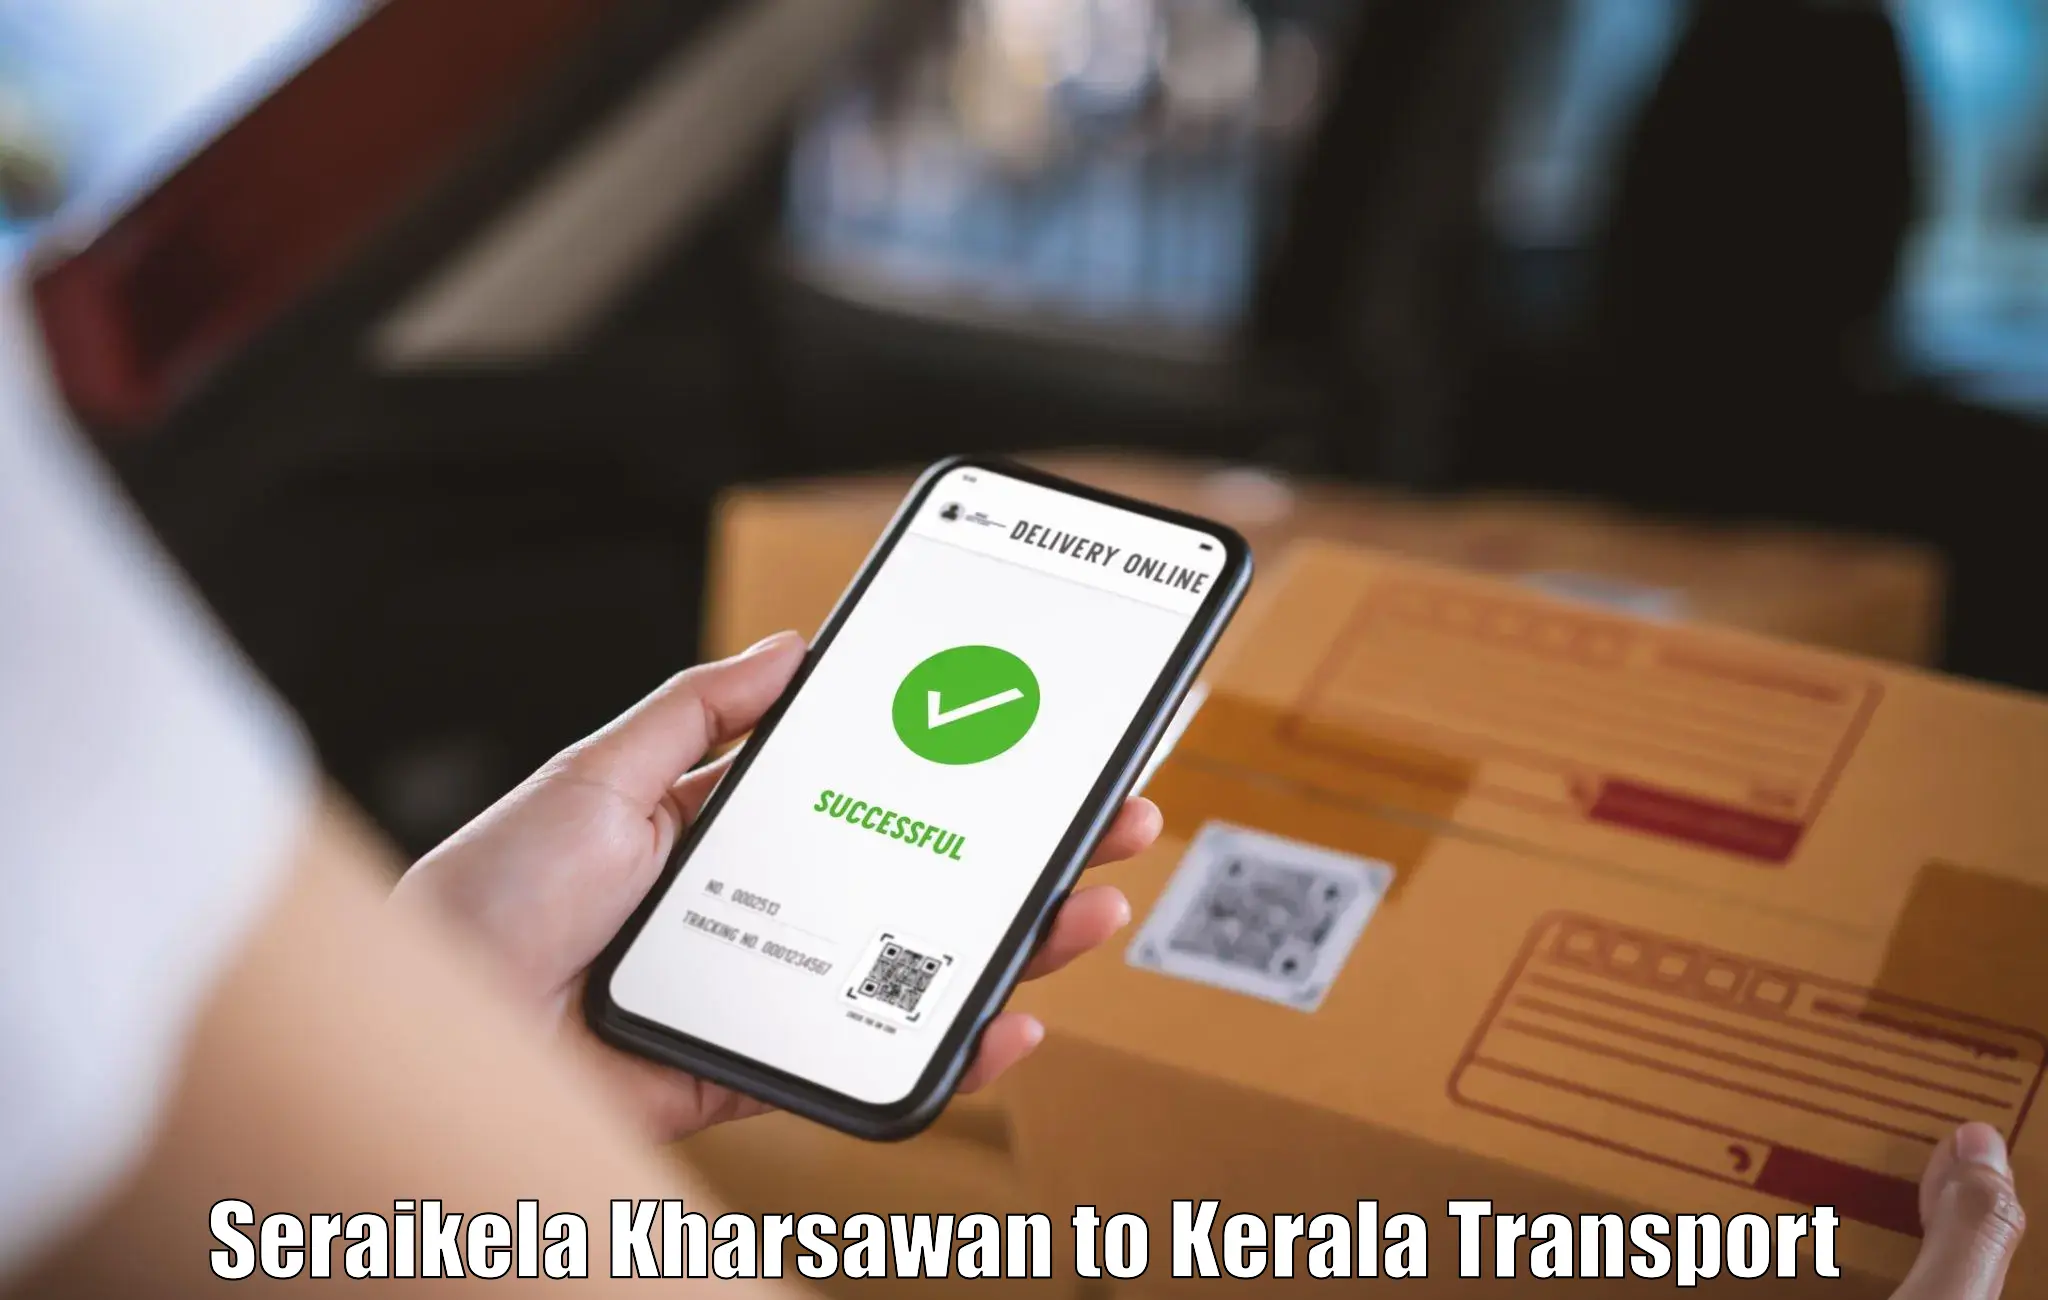 Online transport service Seraikela Kharsawan to Calicut